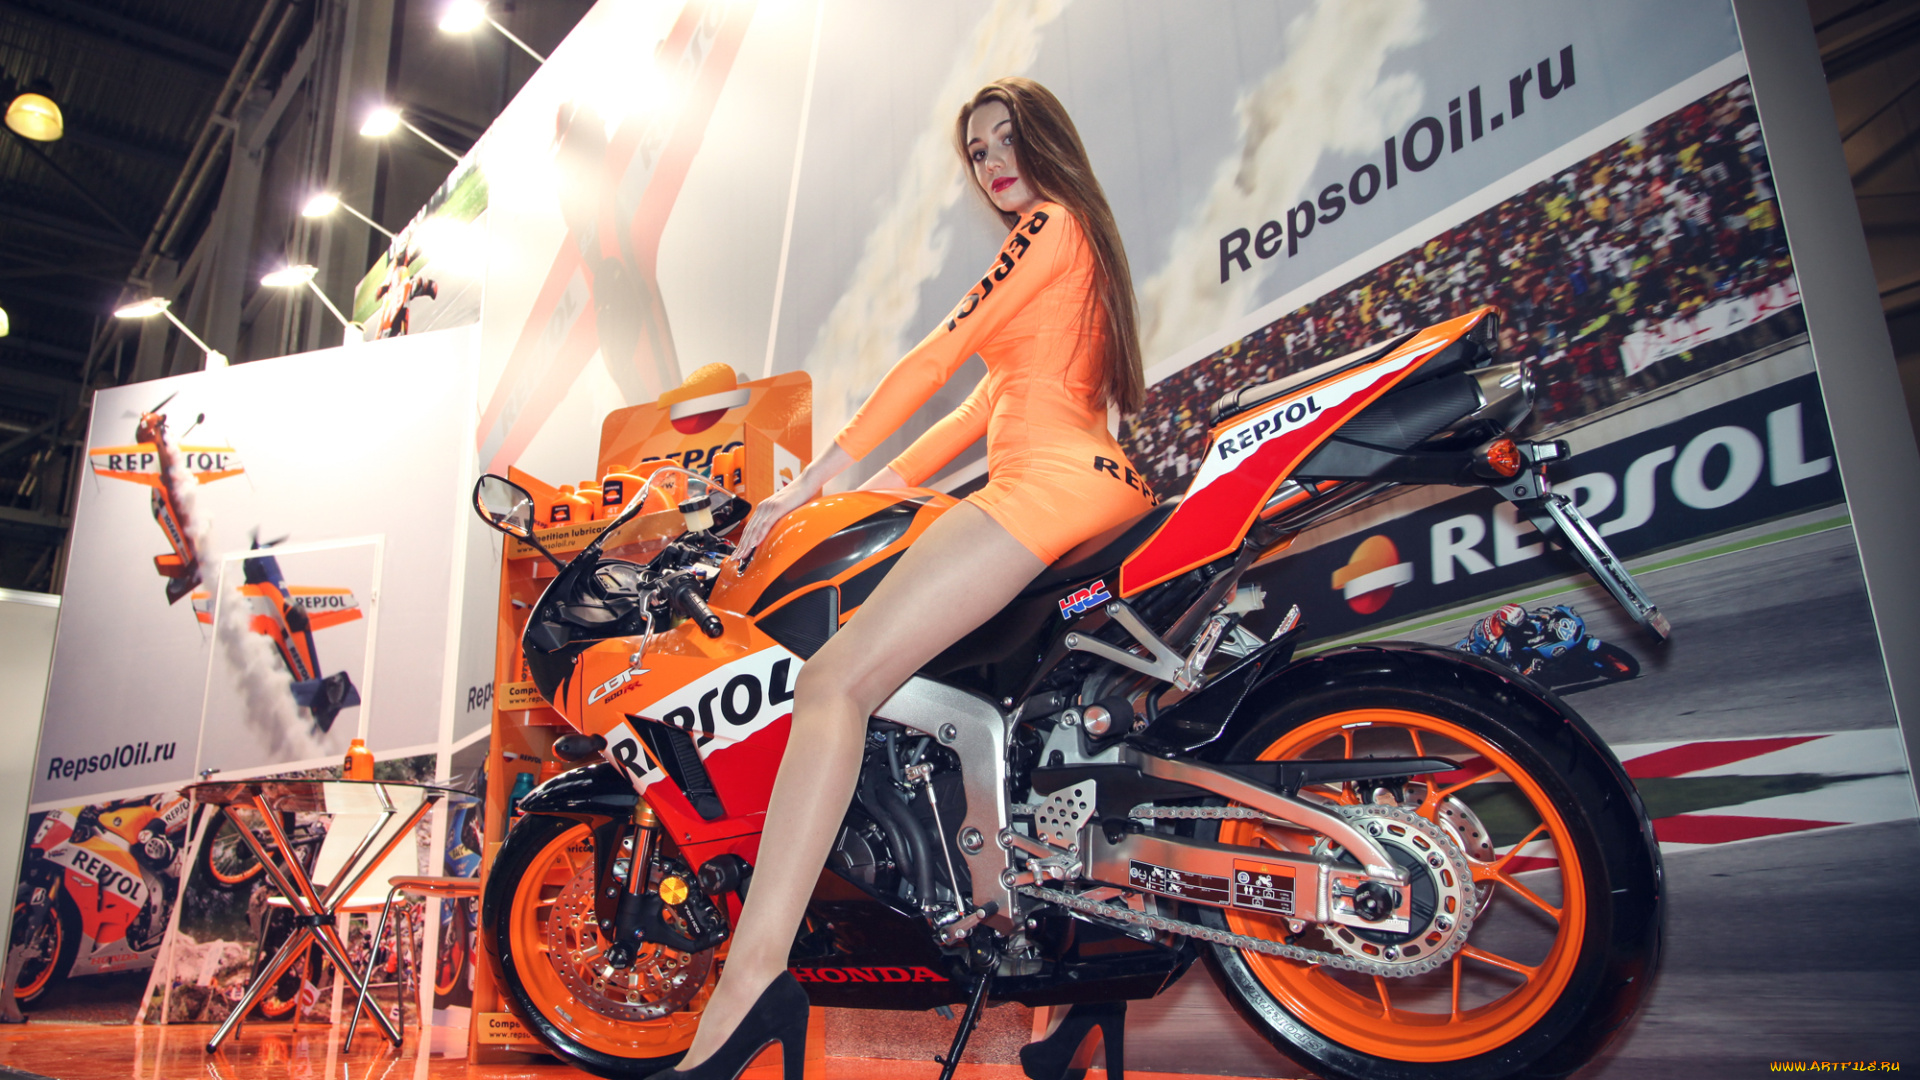 moto, girl, мотоциклы, мото, с, девушкой, moto, girl